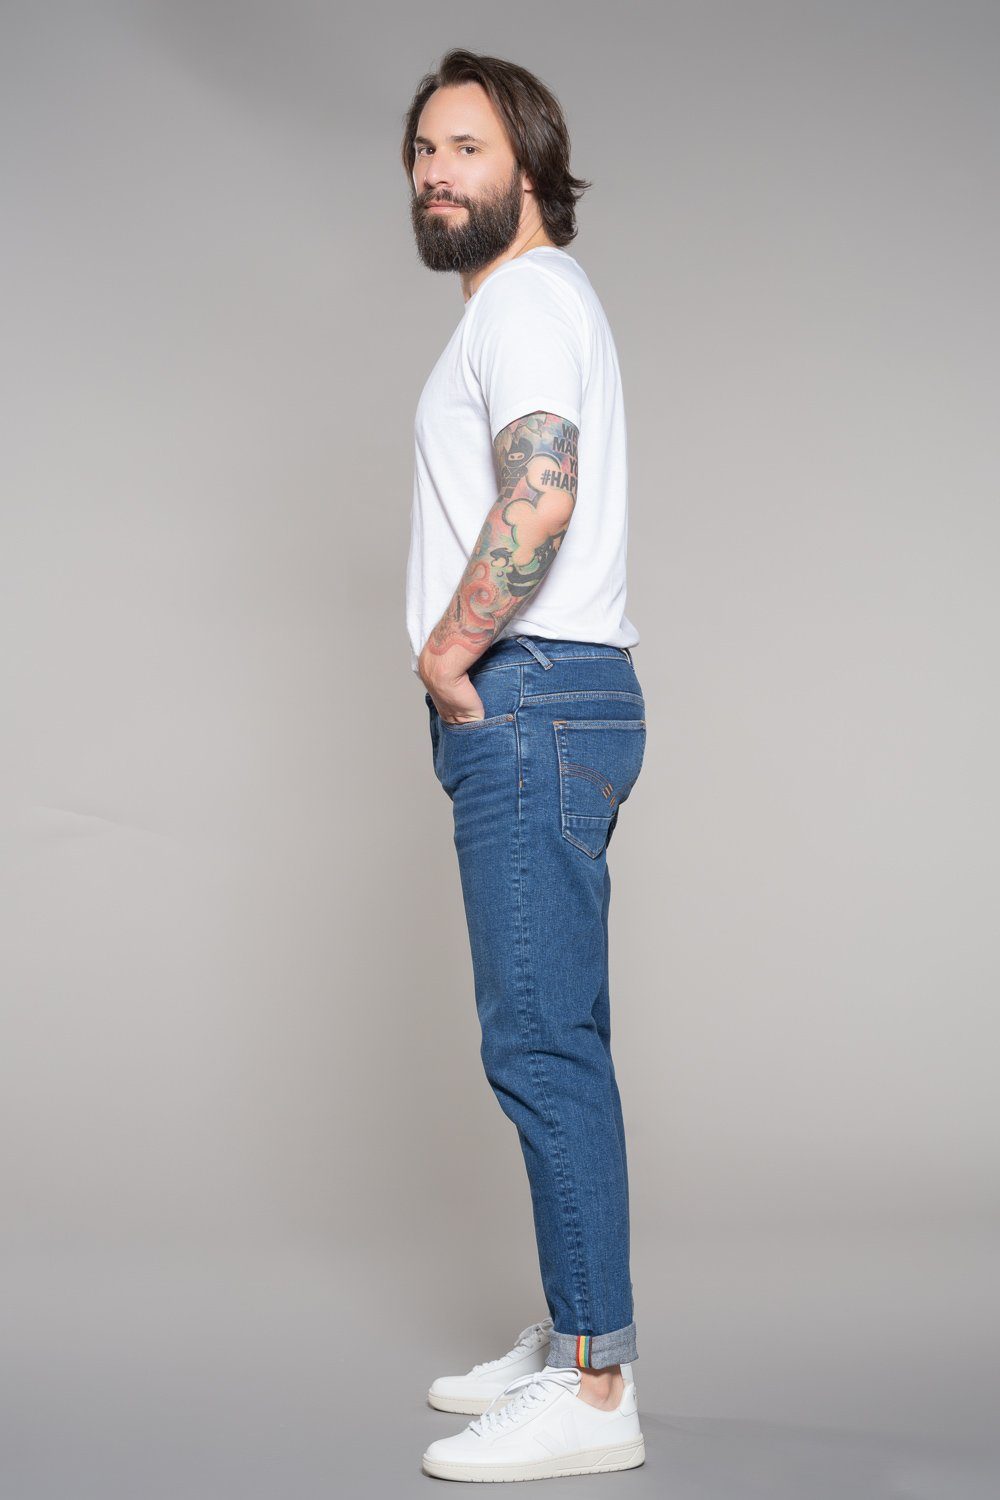 Unisex Waist, Fit, Slim Medium Slim-fit-Jeans Fit, Blue Feuervogl Fashion Slim Unisex, 5-Pocket-Style, fv-West:minster, Medium Waist